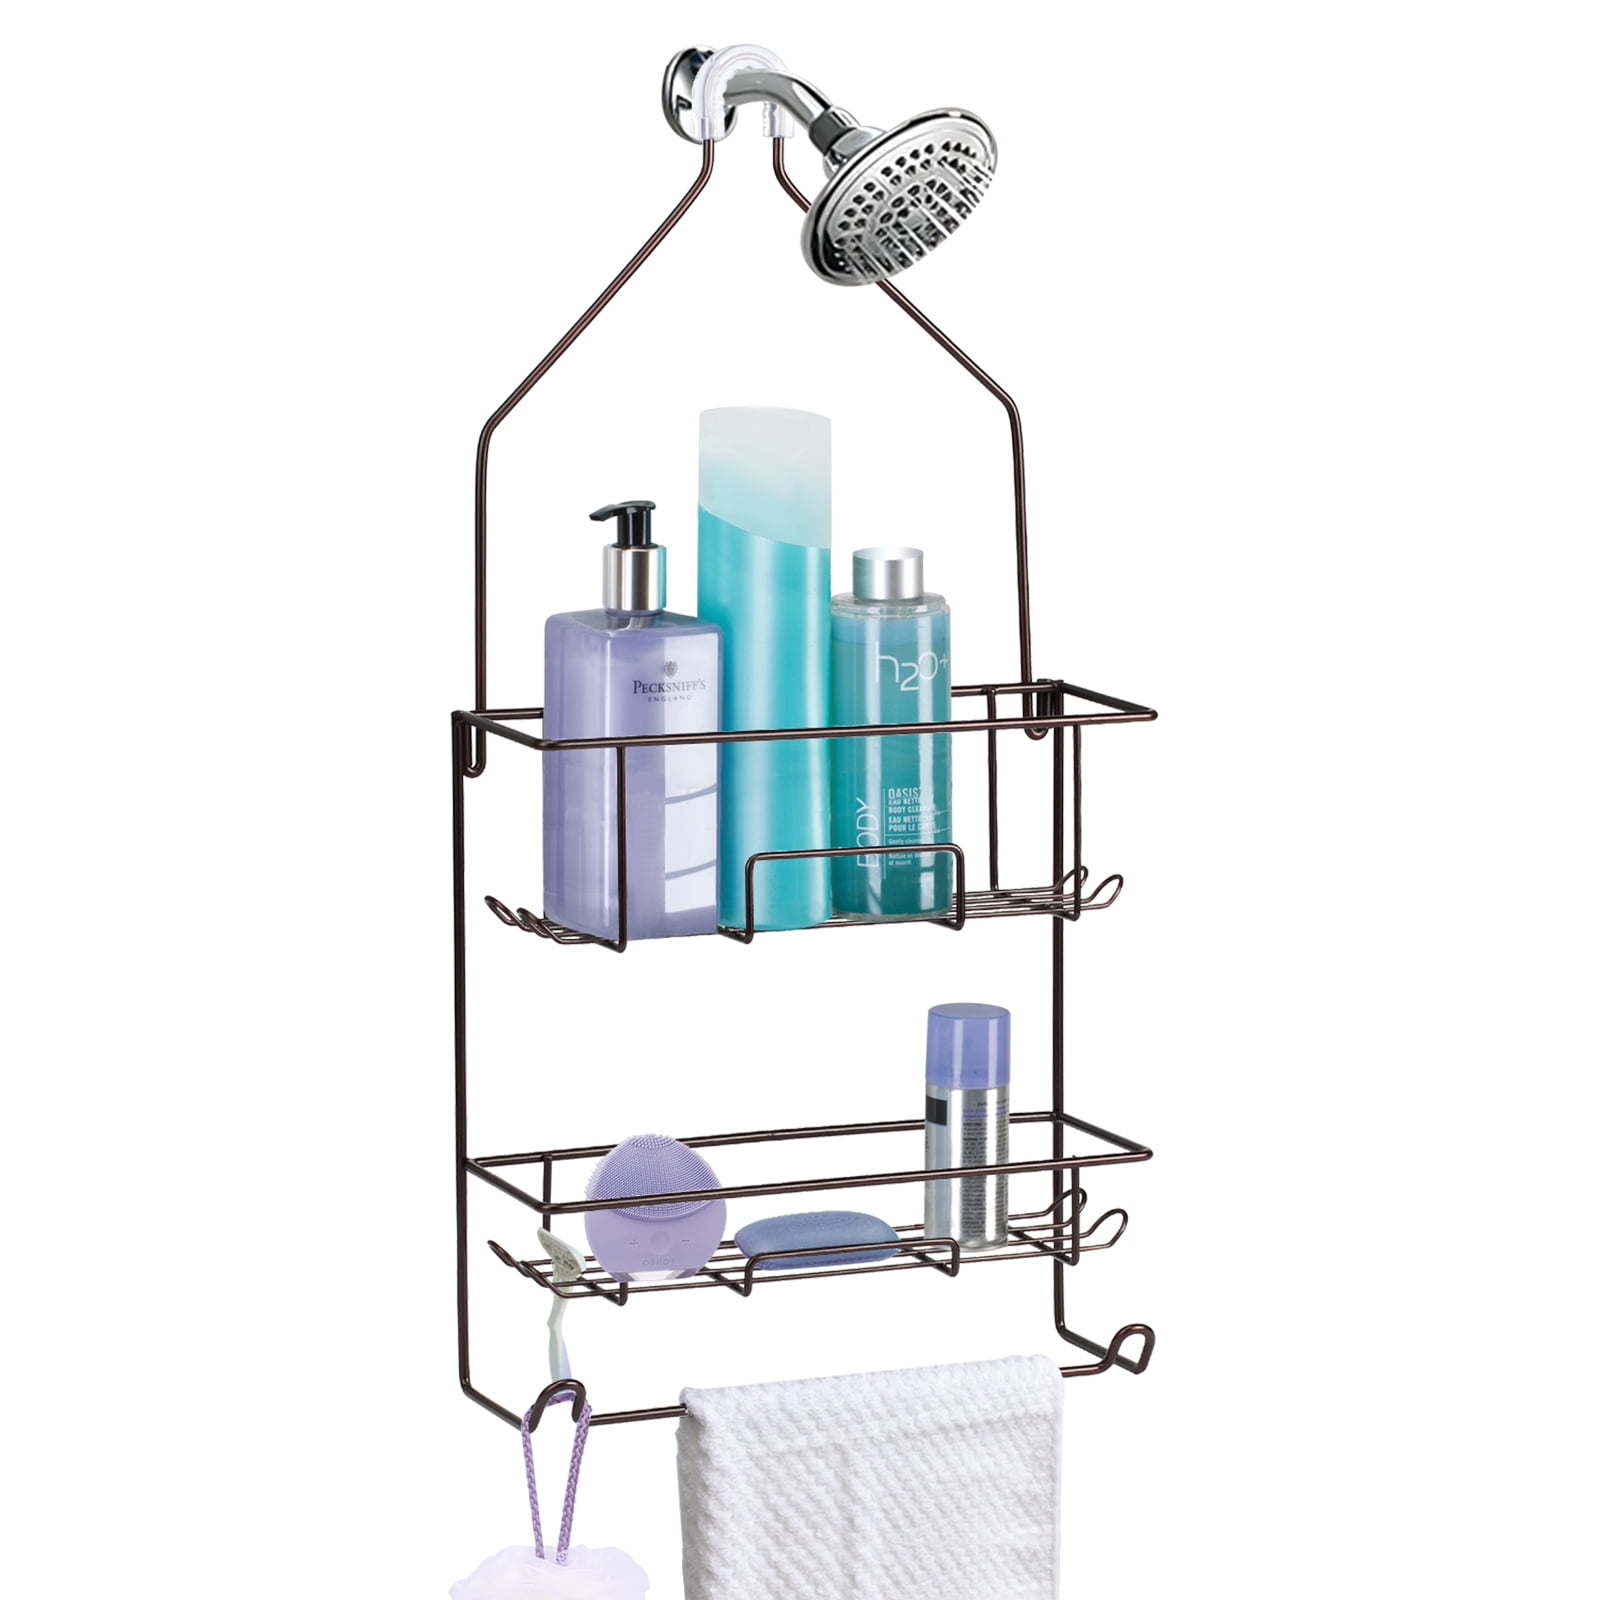 JOMOO Luxury Bathroom Single Corner Shelf Holder Storage Basket Bath Caddy 